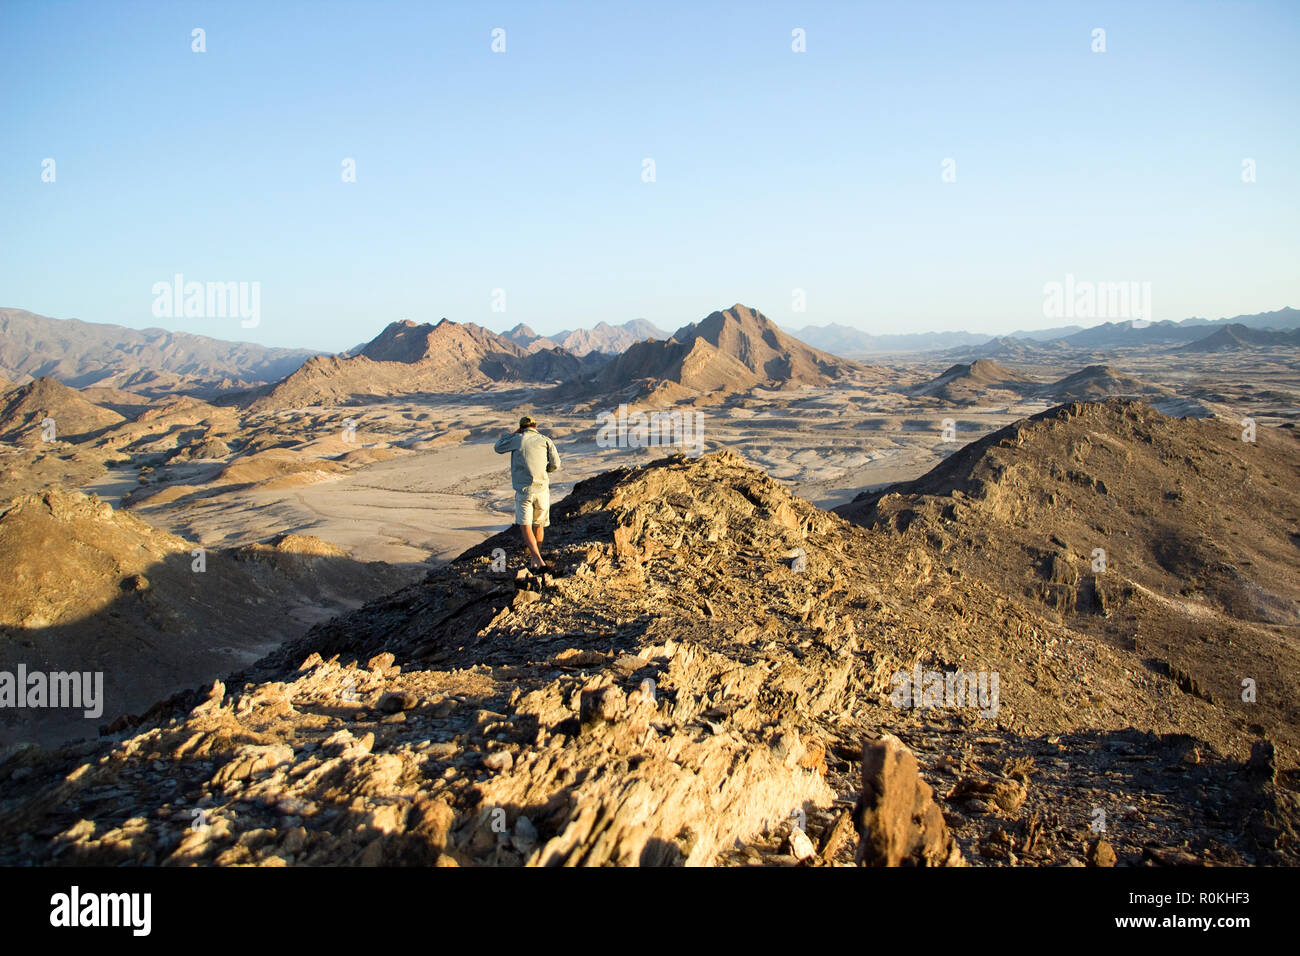 Hiking in the Richtersveld mountainous desert landscape Stock Photo